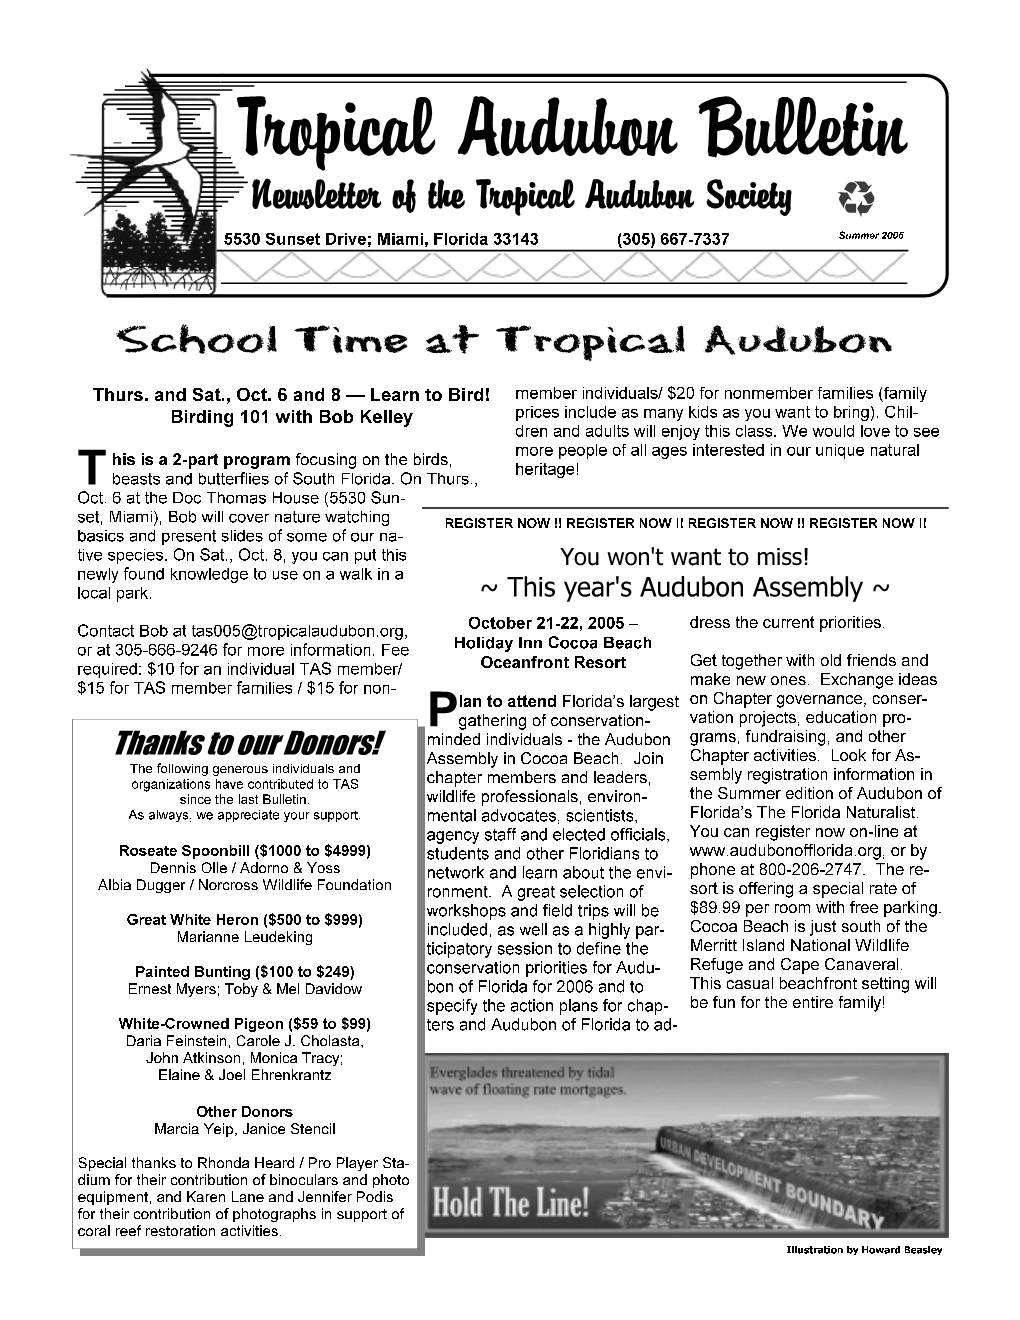 School Time at Tropical Audubon